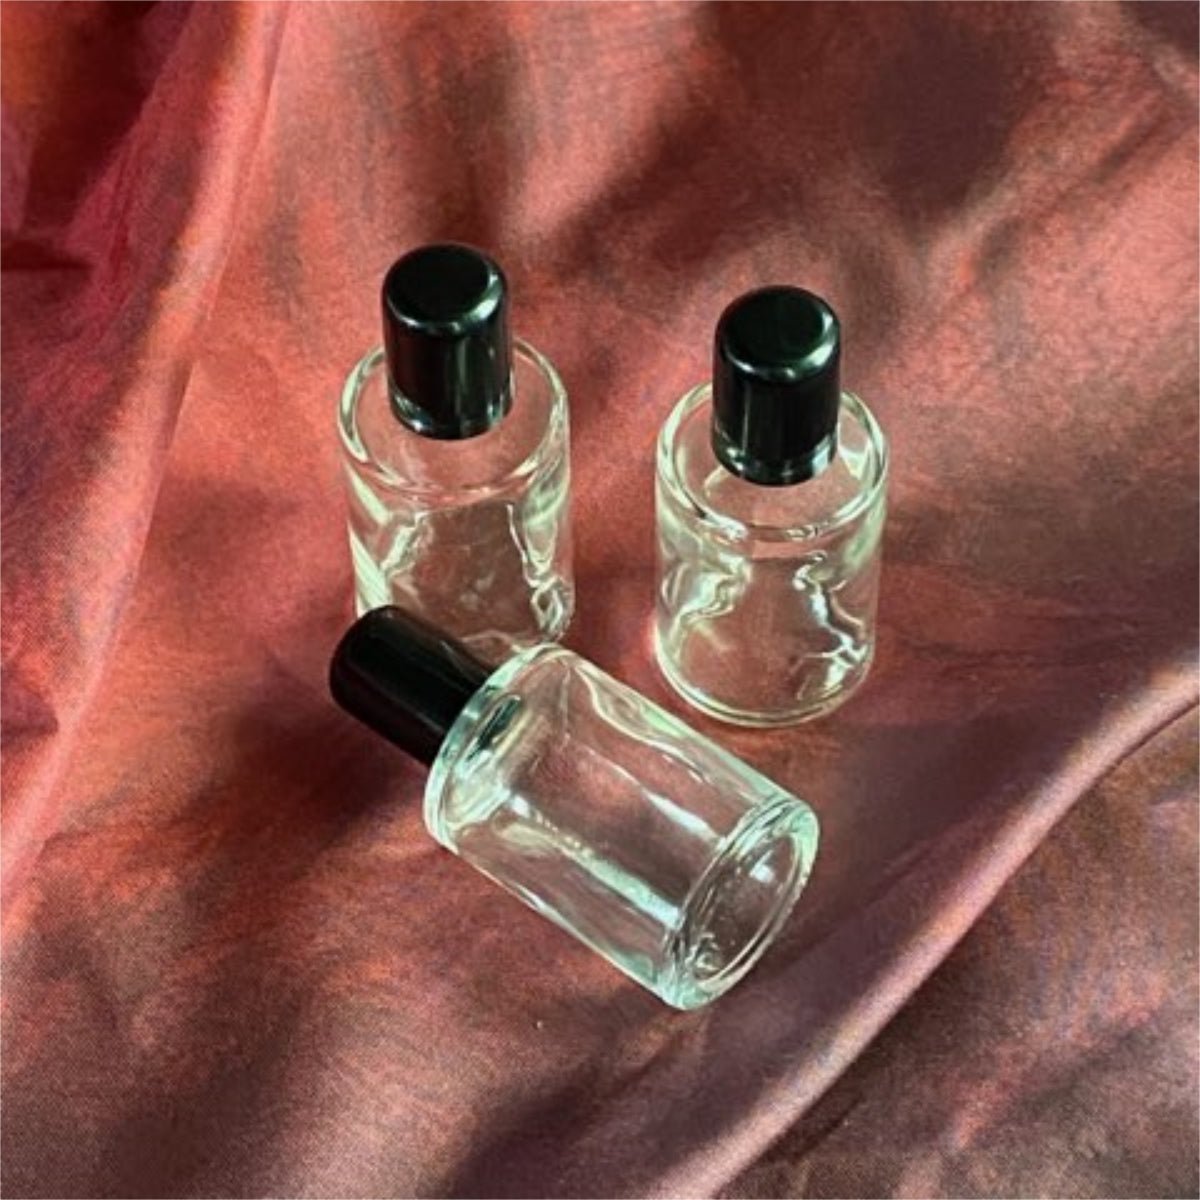 1/2 oz Glass Perfume Bottle - 13 Moons